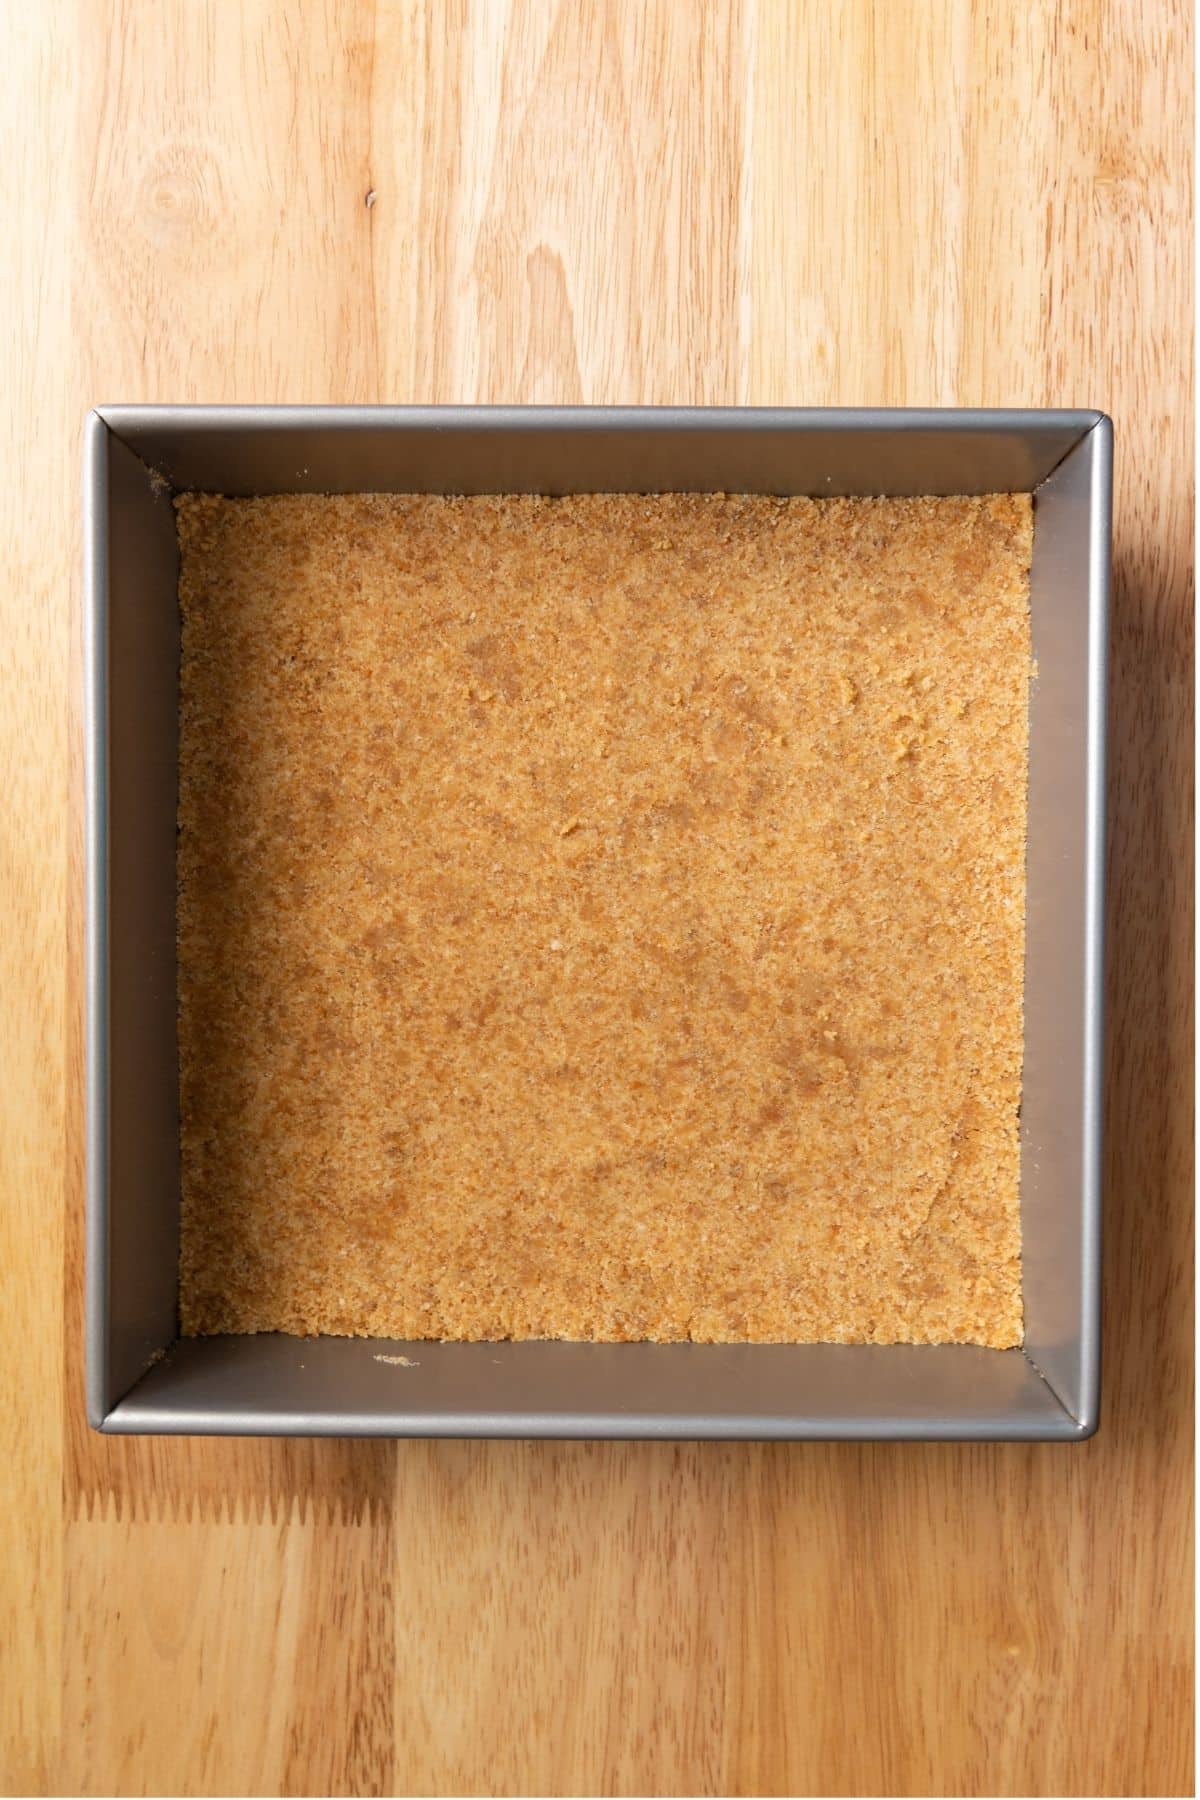 Graham cracker crumbs pressed in square pan.